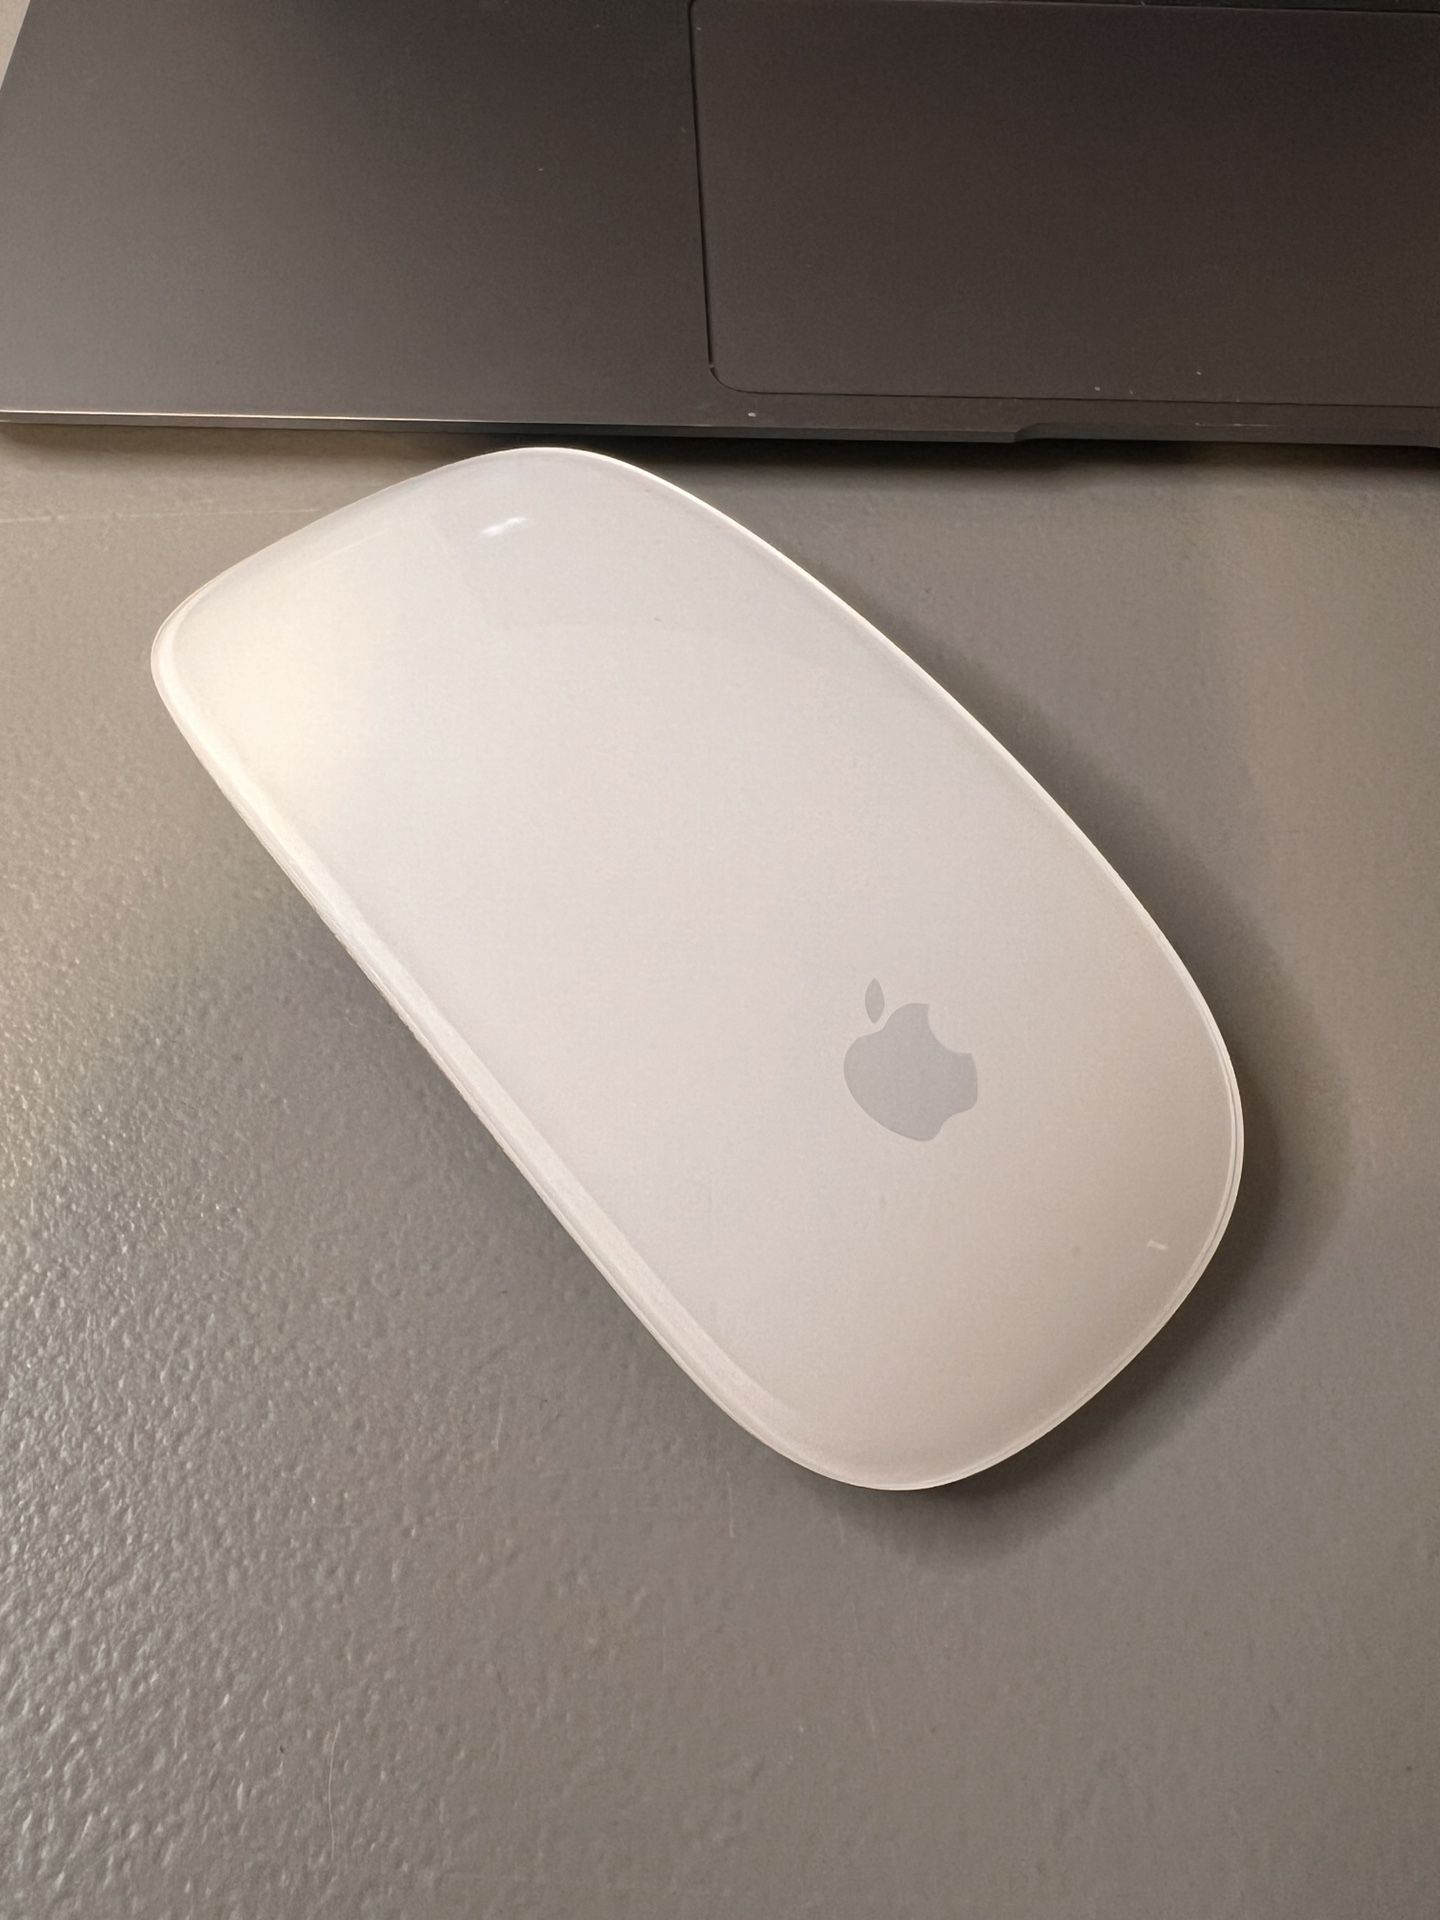 Apple Magic Mouse Wireless Bluetooth White A1296